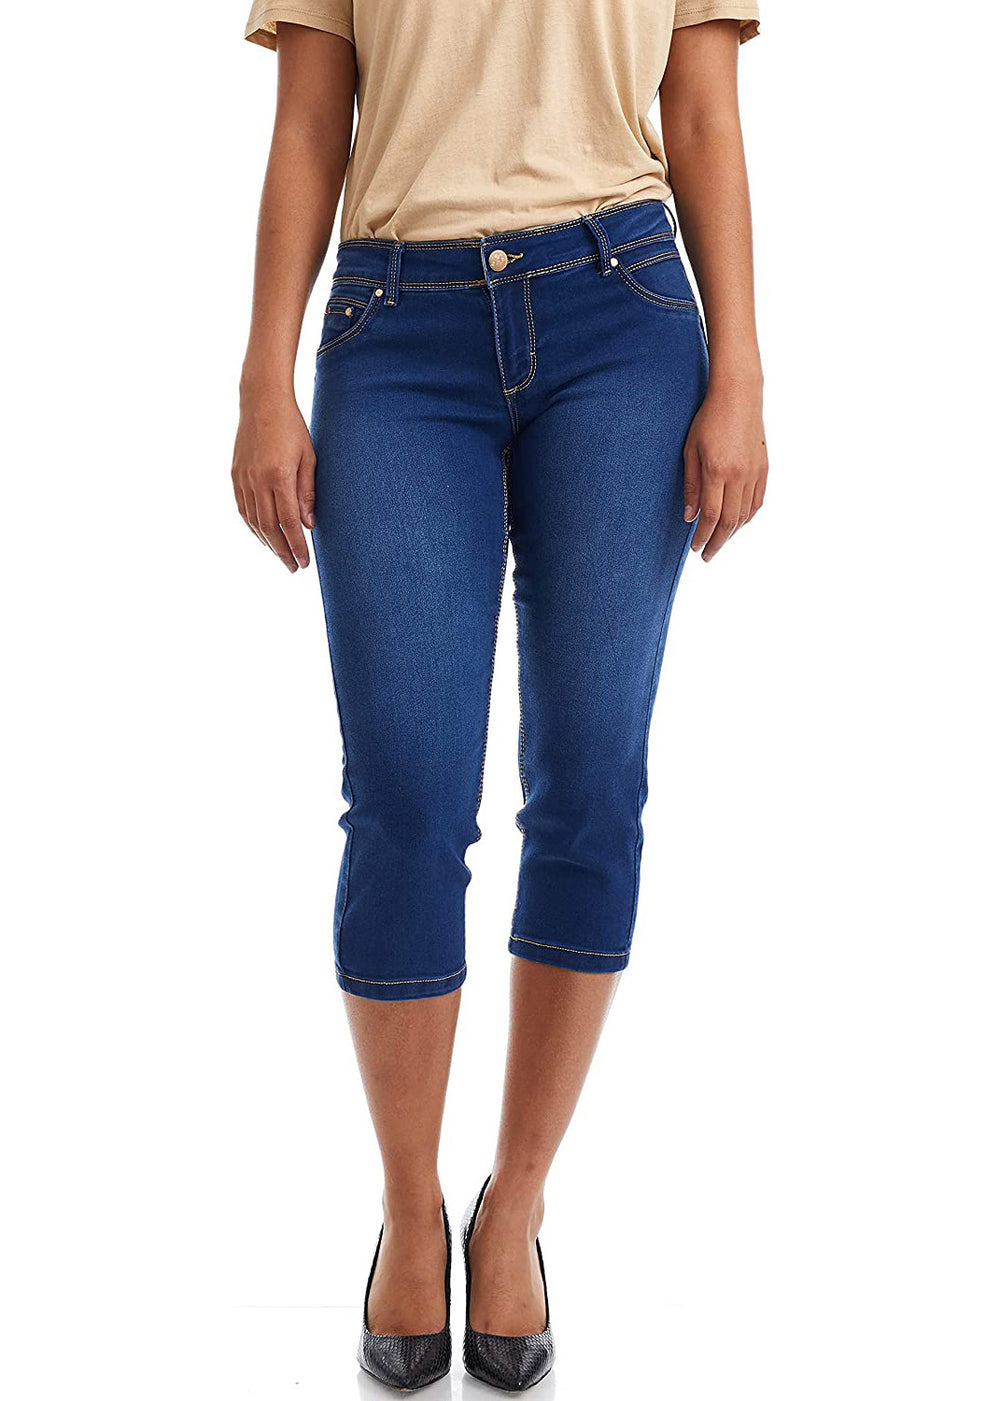 Womens Blue Jean Capri Pants, High Waist Capris Jeans